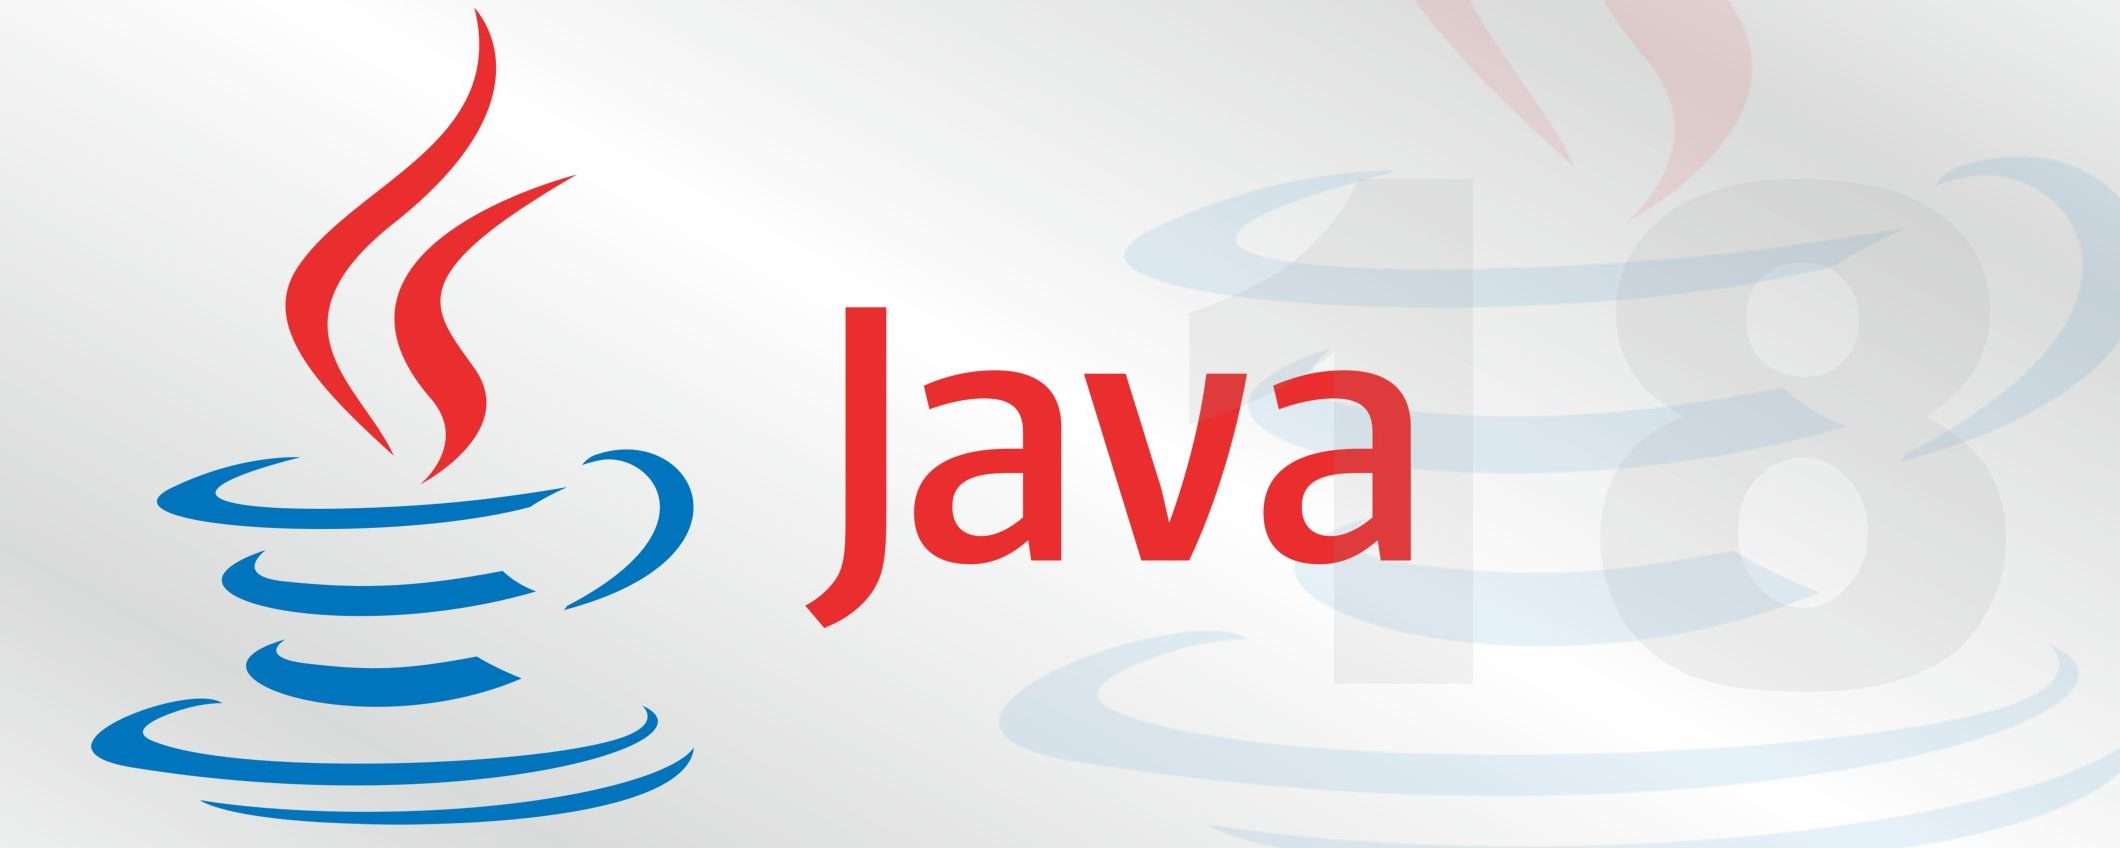 Oracle annuncia Java 18: stabilità, sicurezza, performance